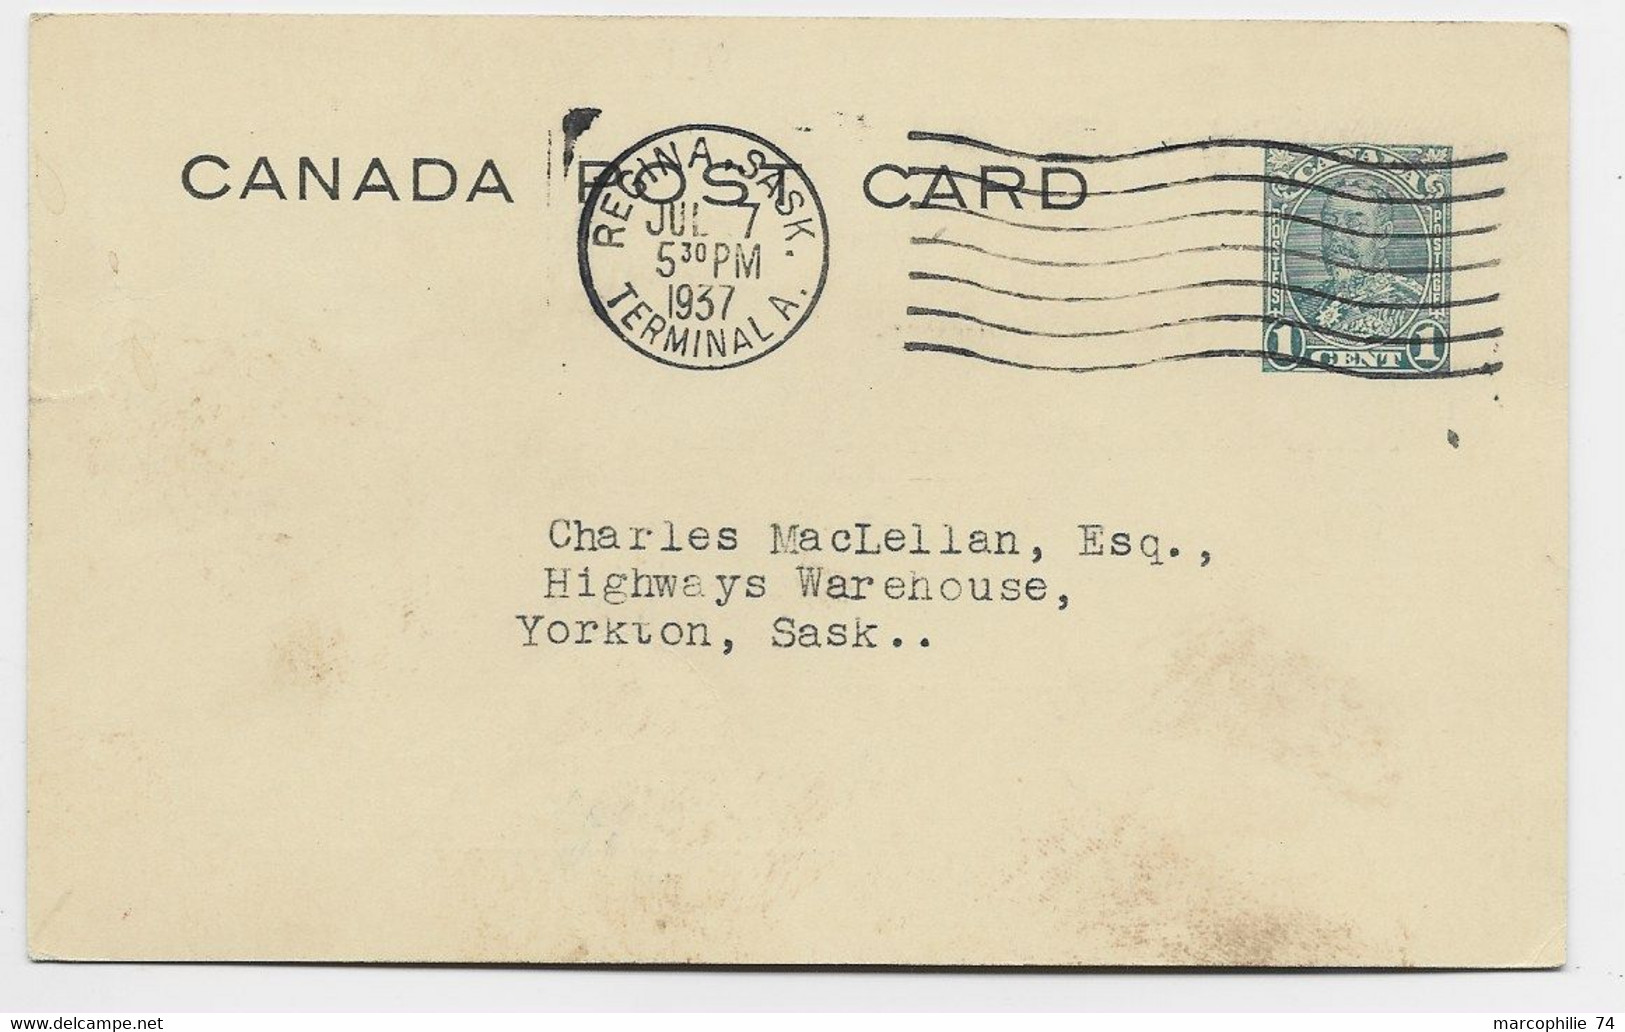 CANADA ENTIER 1 CENT POST CARD REGINA SASK JUL 7 1937 REPIQUAGE MOTOR LICENSE OFFICE - 1903-1954 Rois